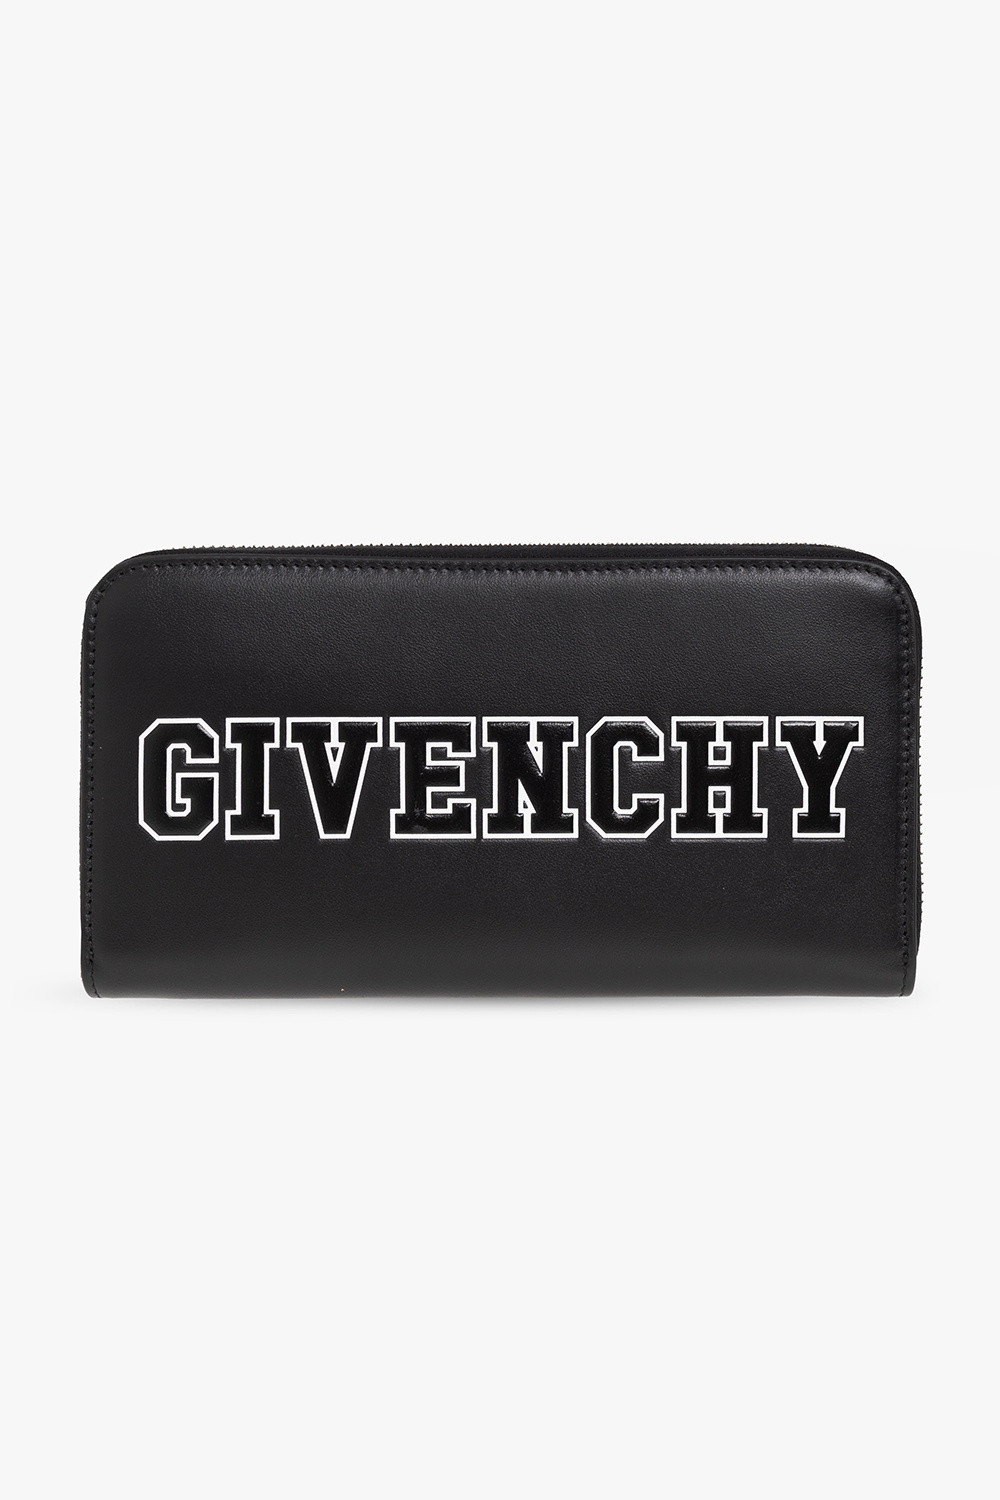 Givenchy givenchy 4g large scarf item